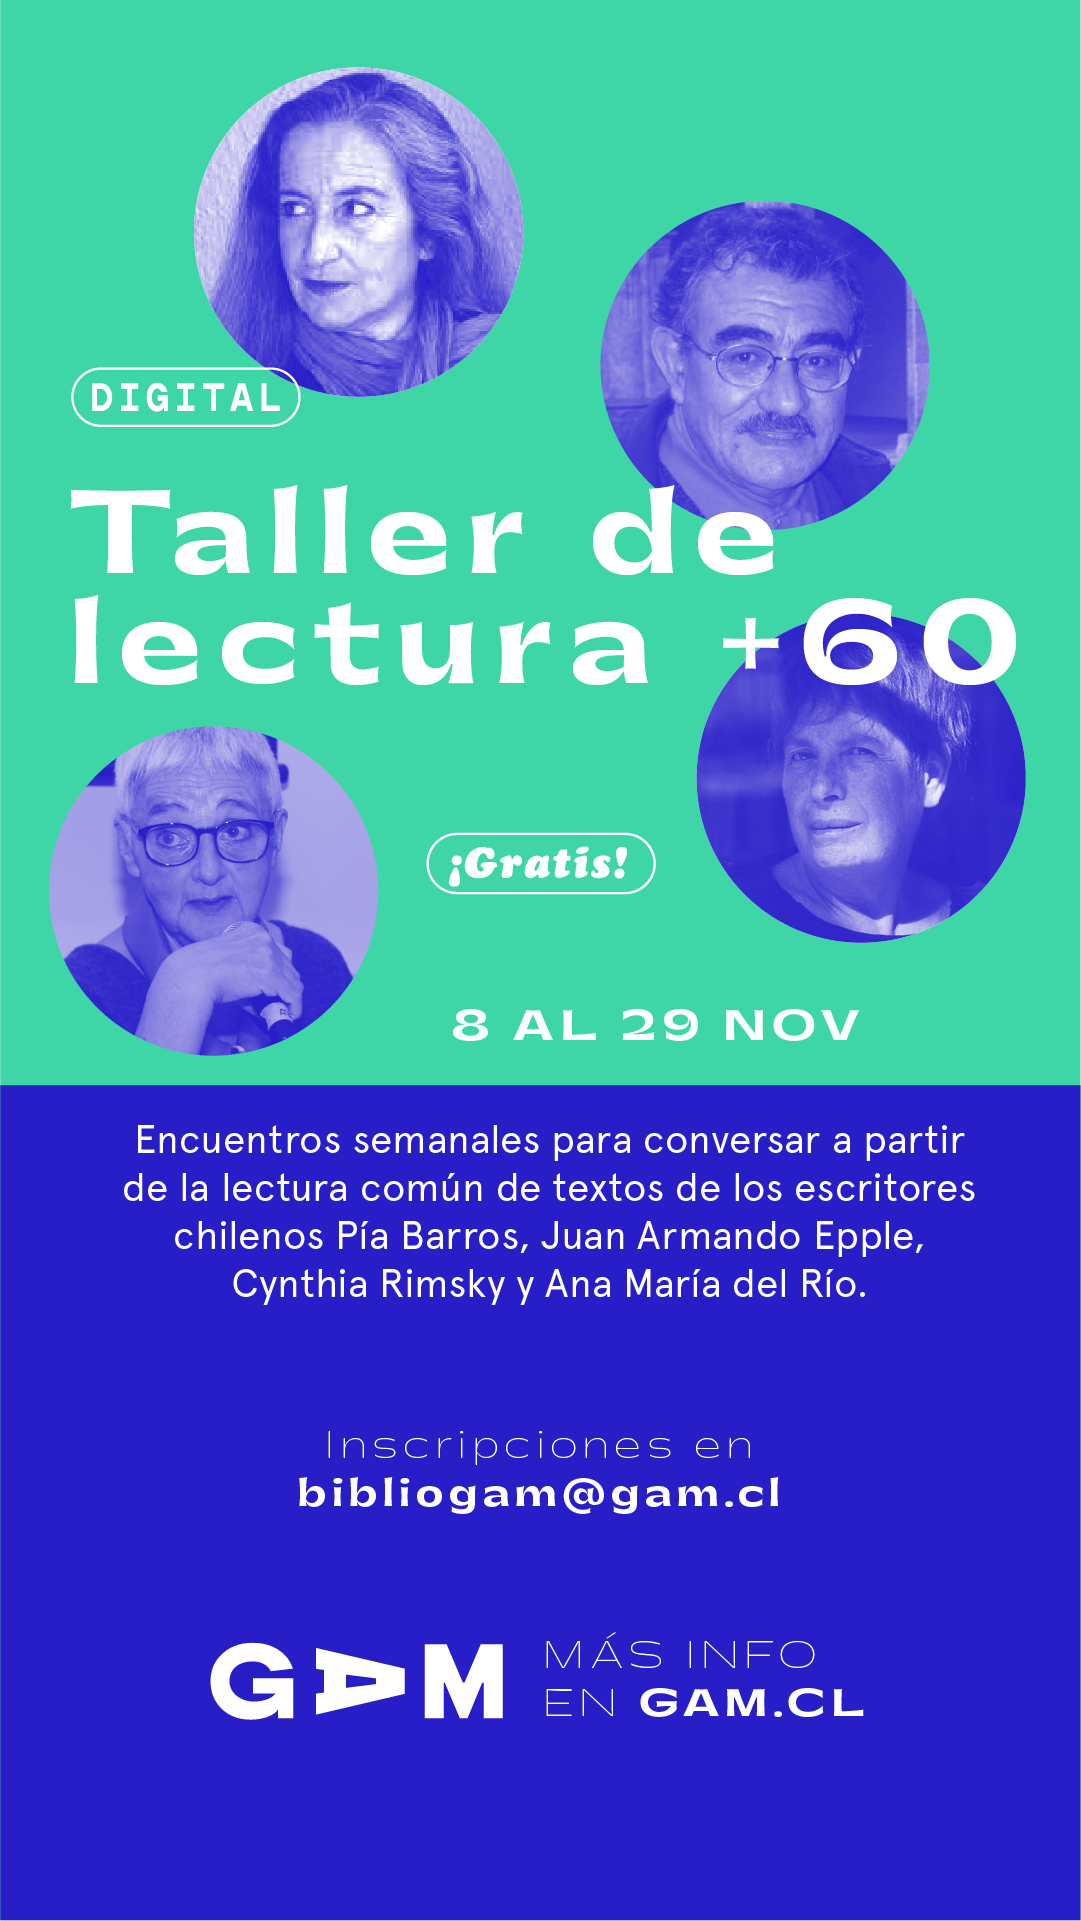 __TallerLectura+60_Nov_flyer.png